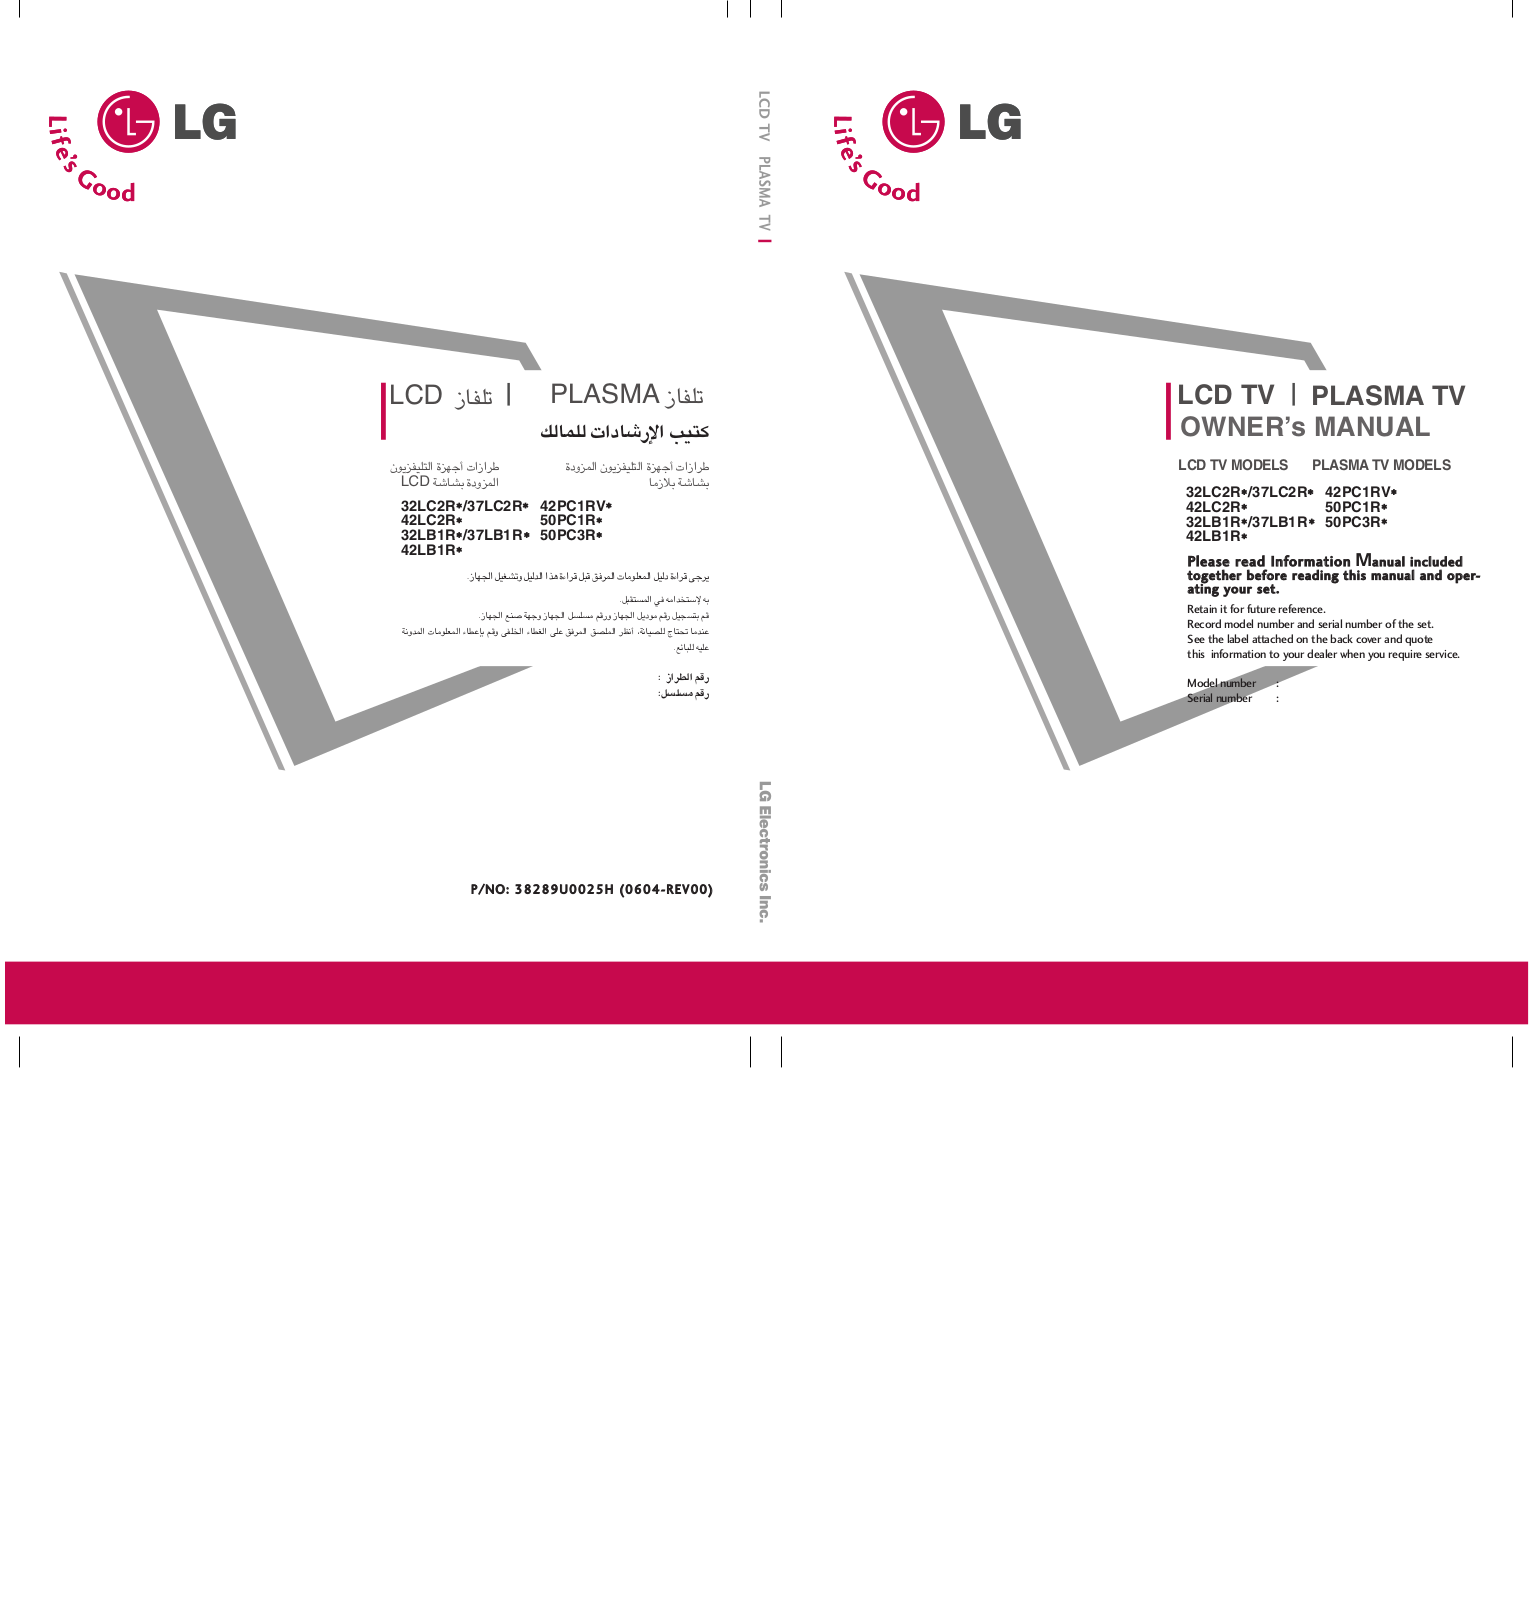 Lg 42LB1R, 50PC3R, 37LB1R, 32LB1R, 42LC2R User Manual